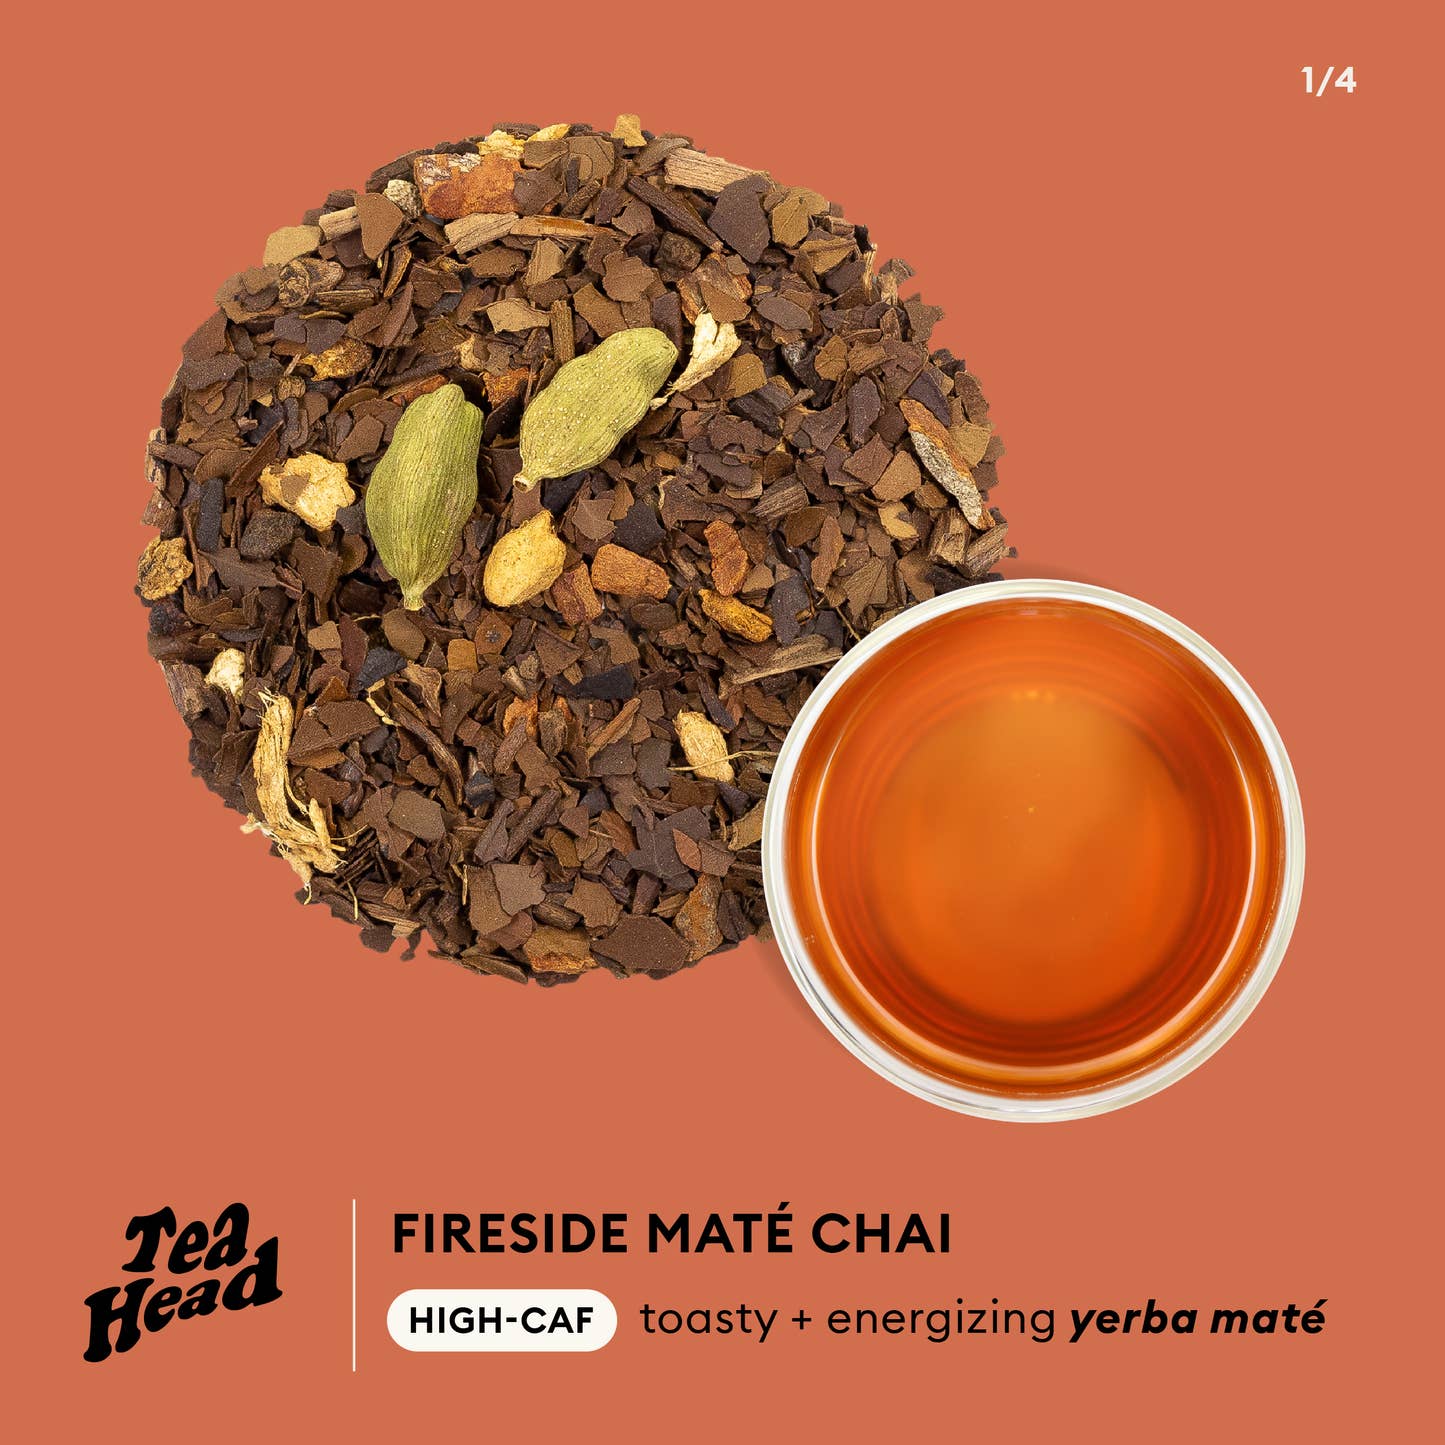 Tea Head - Fireside Maté Chai high-caf, toasty + energizing yerba mate infographic